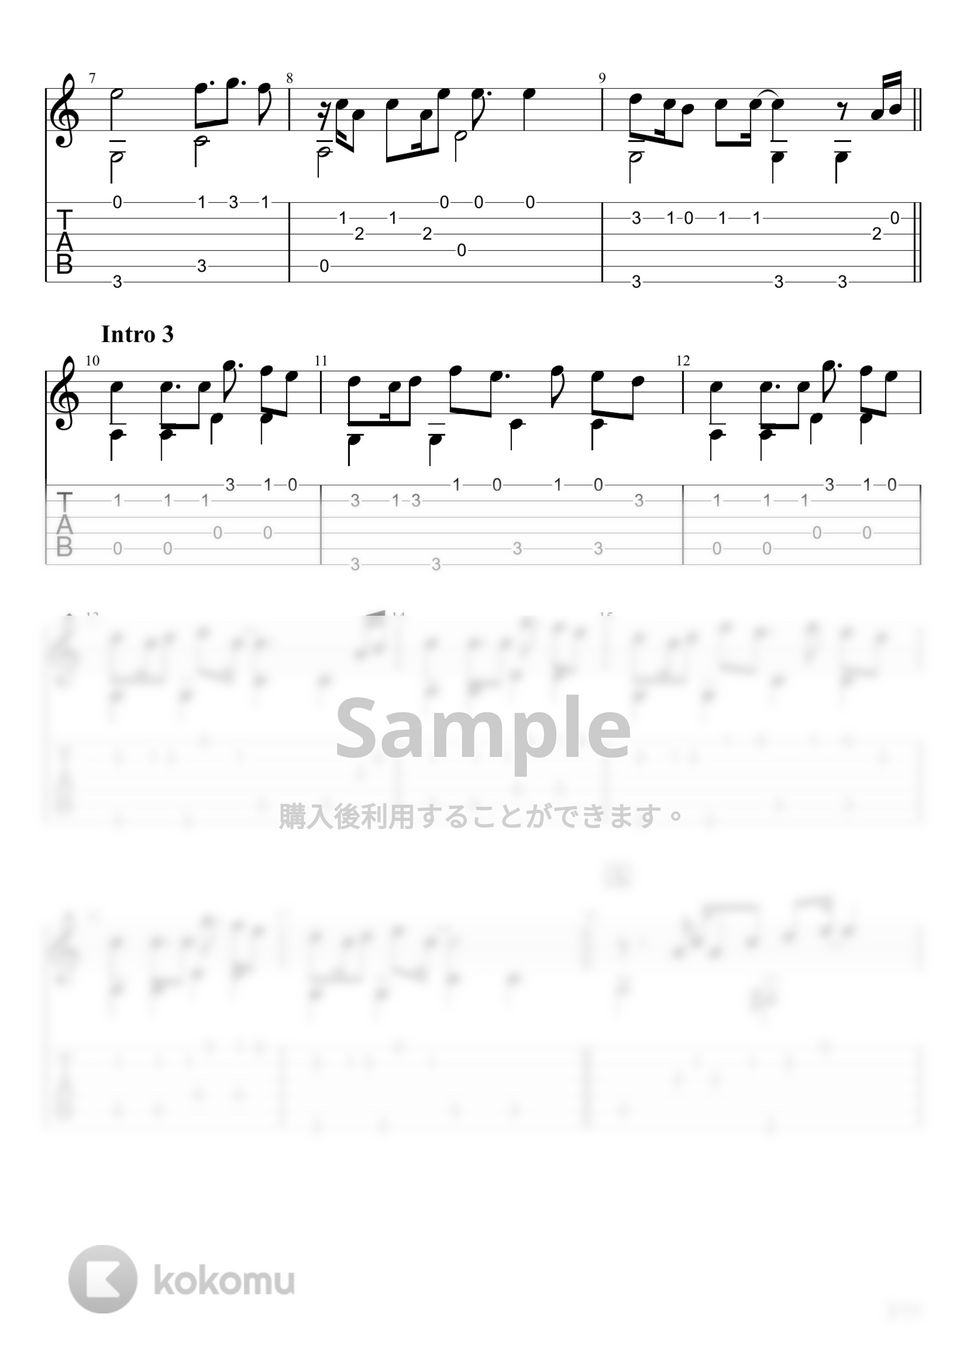 40mP - からくりピエロ (ソロギター) by u3danchou